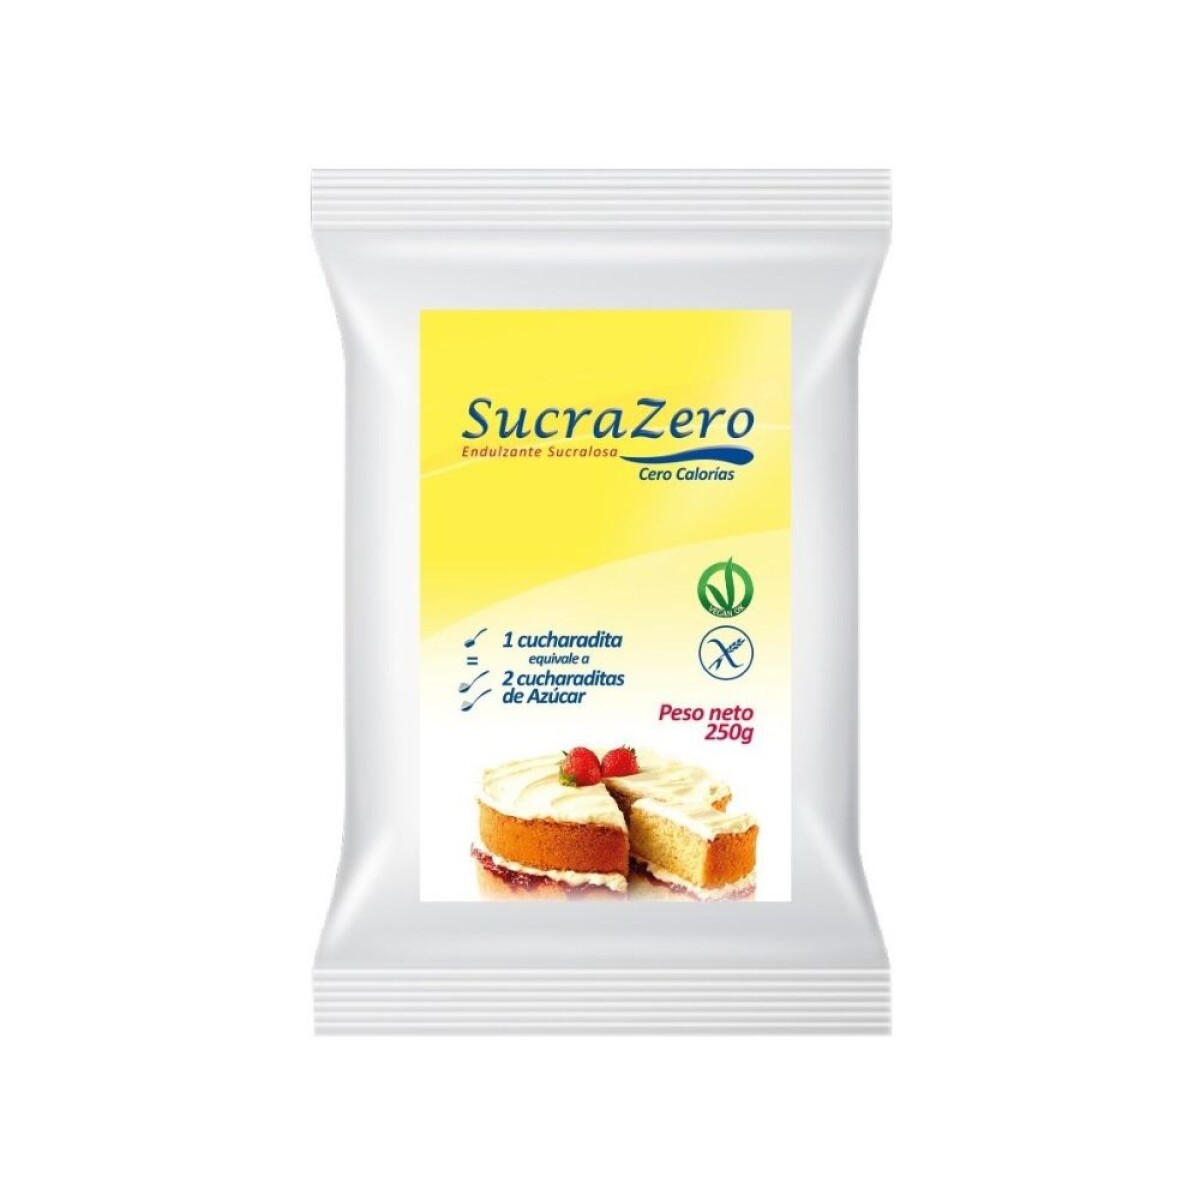 Zucra Zero Deli for Life 250g 